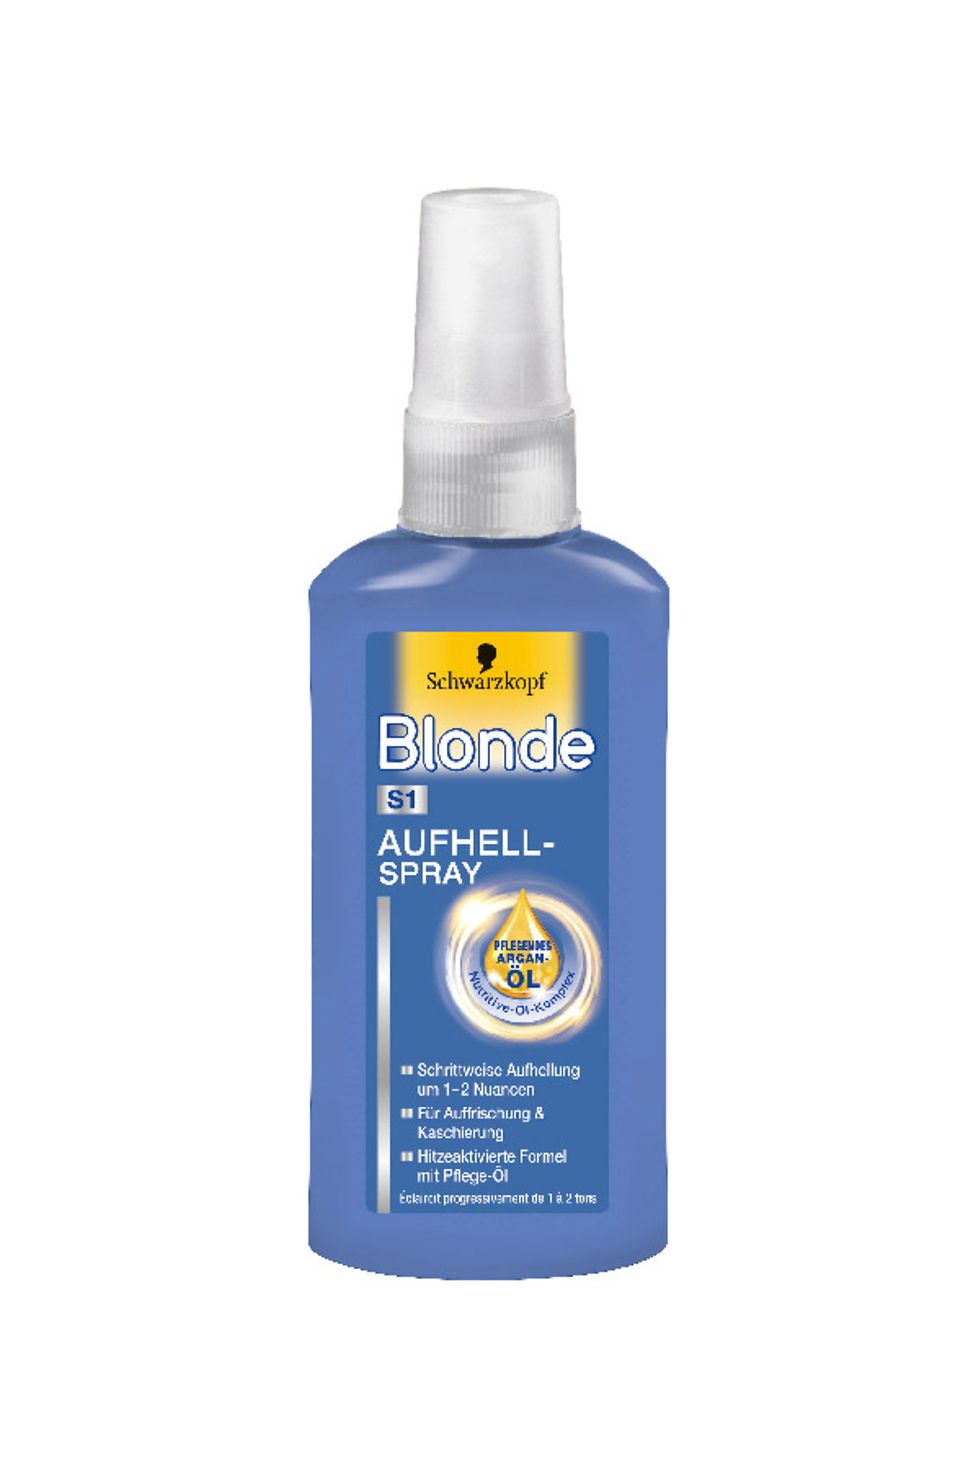 Blonde S1 Aufhell-Spray